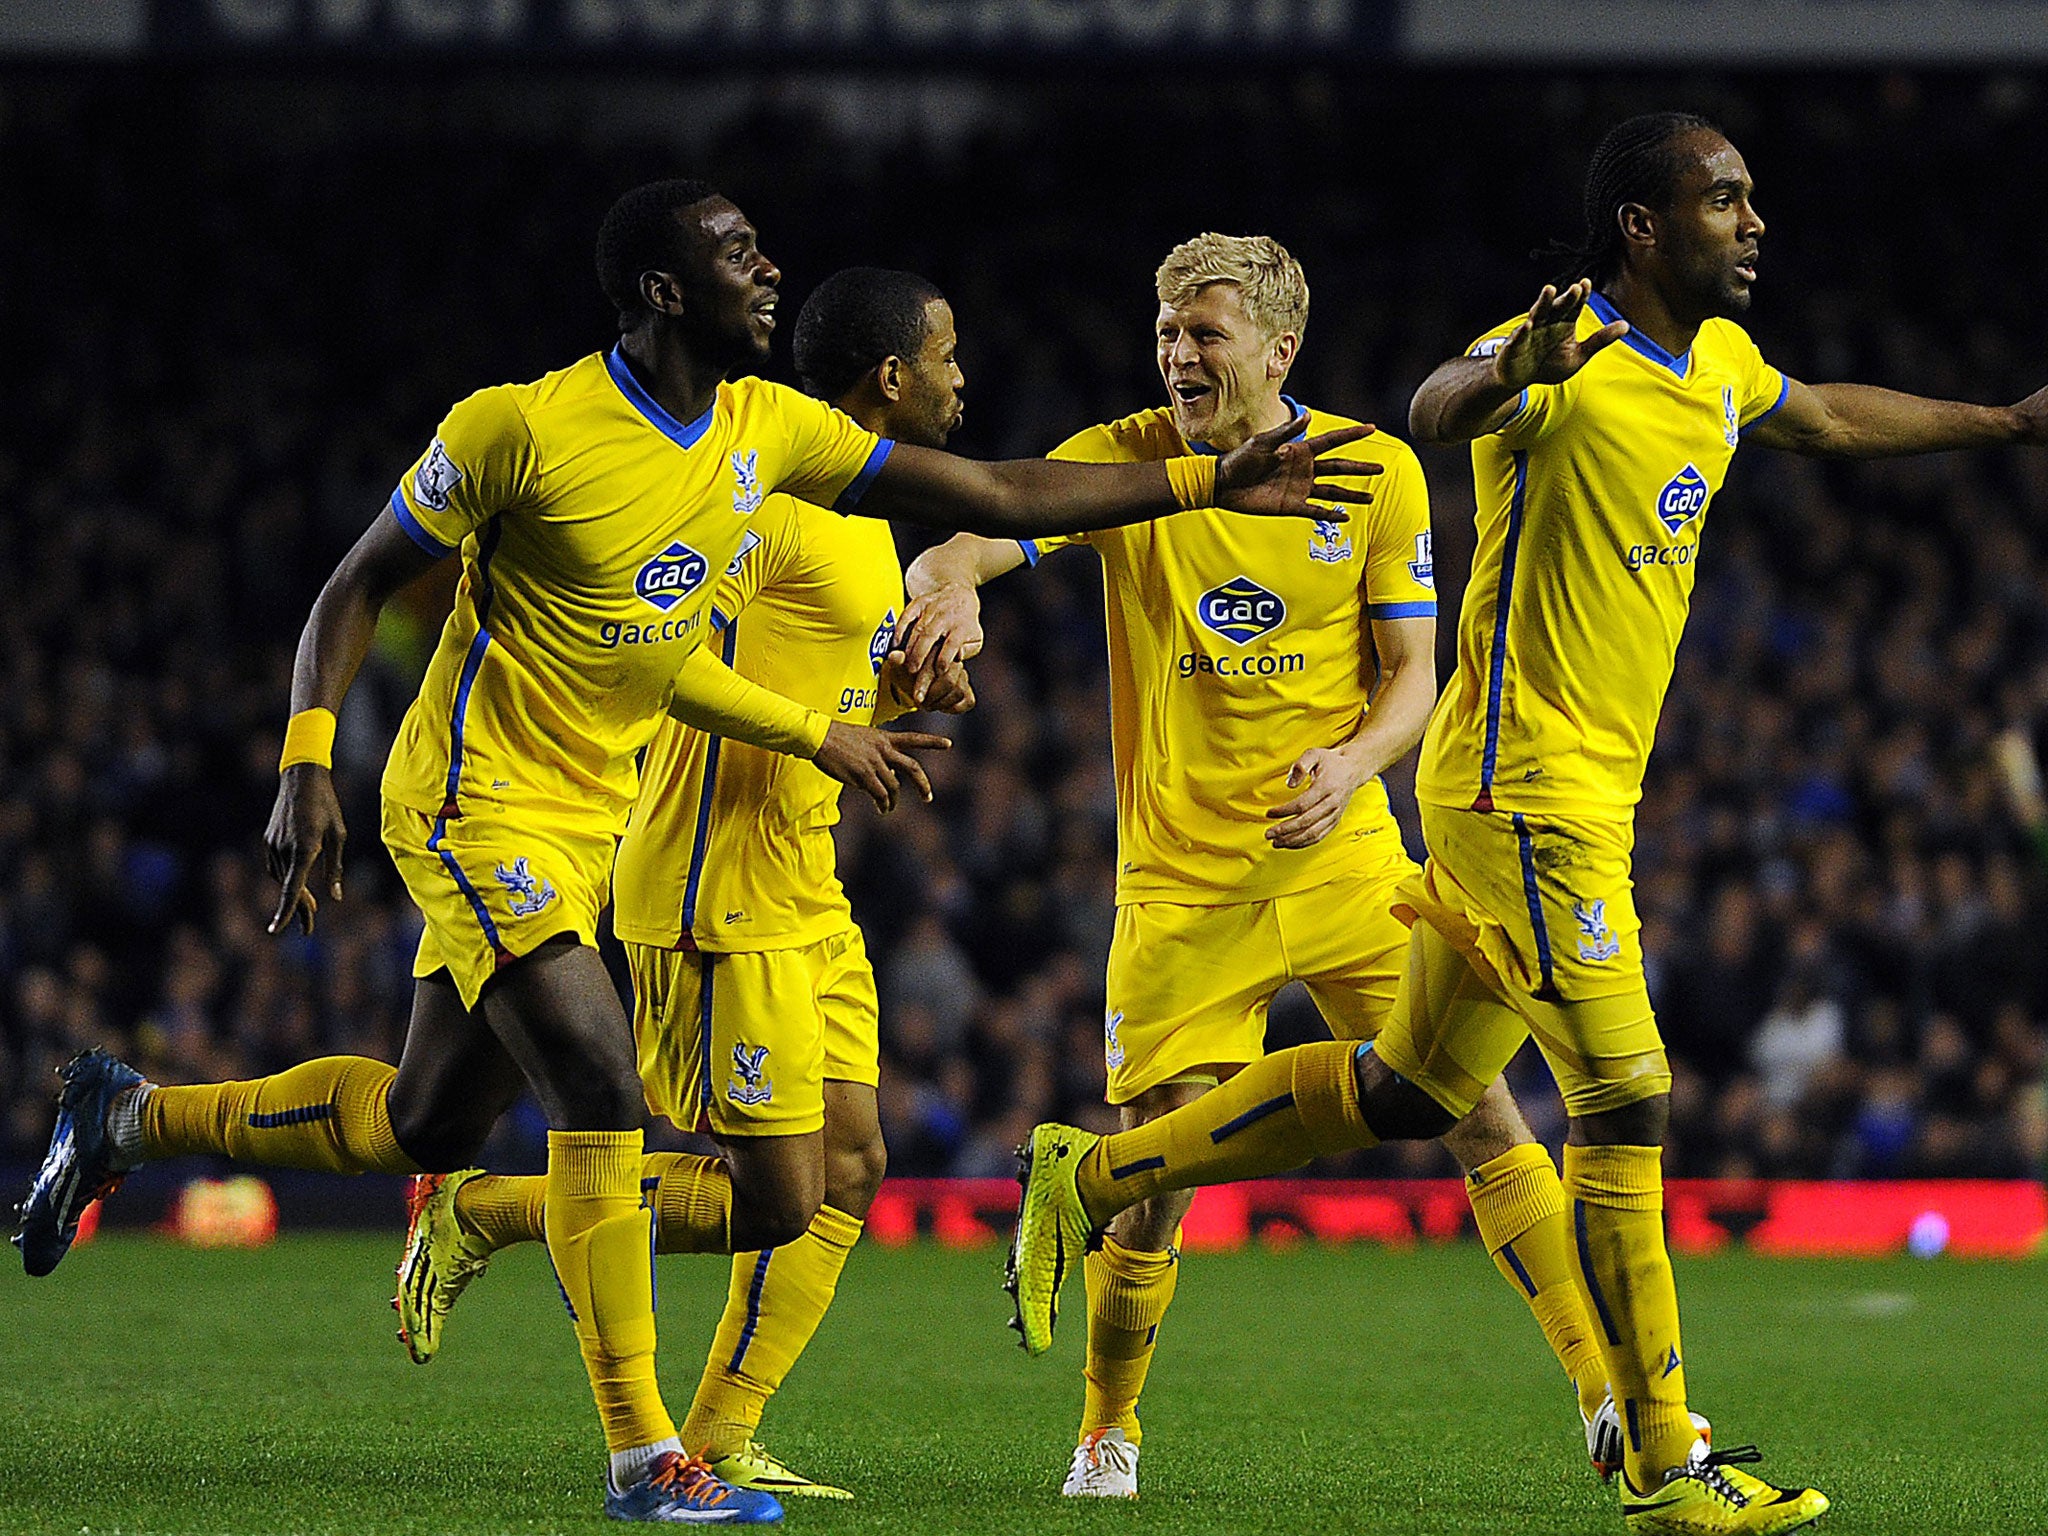 Cameron Jerome (far right) celebrates scoring Palace’s third goal against Everton on Wednesday